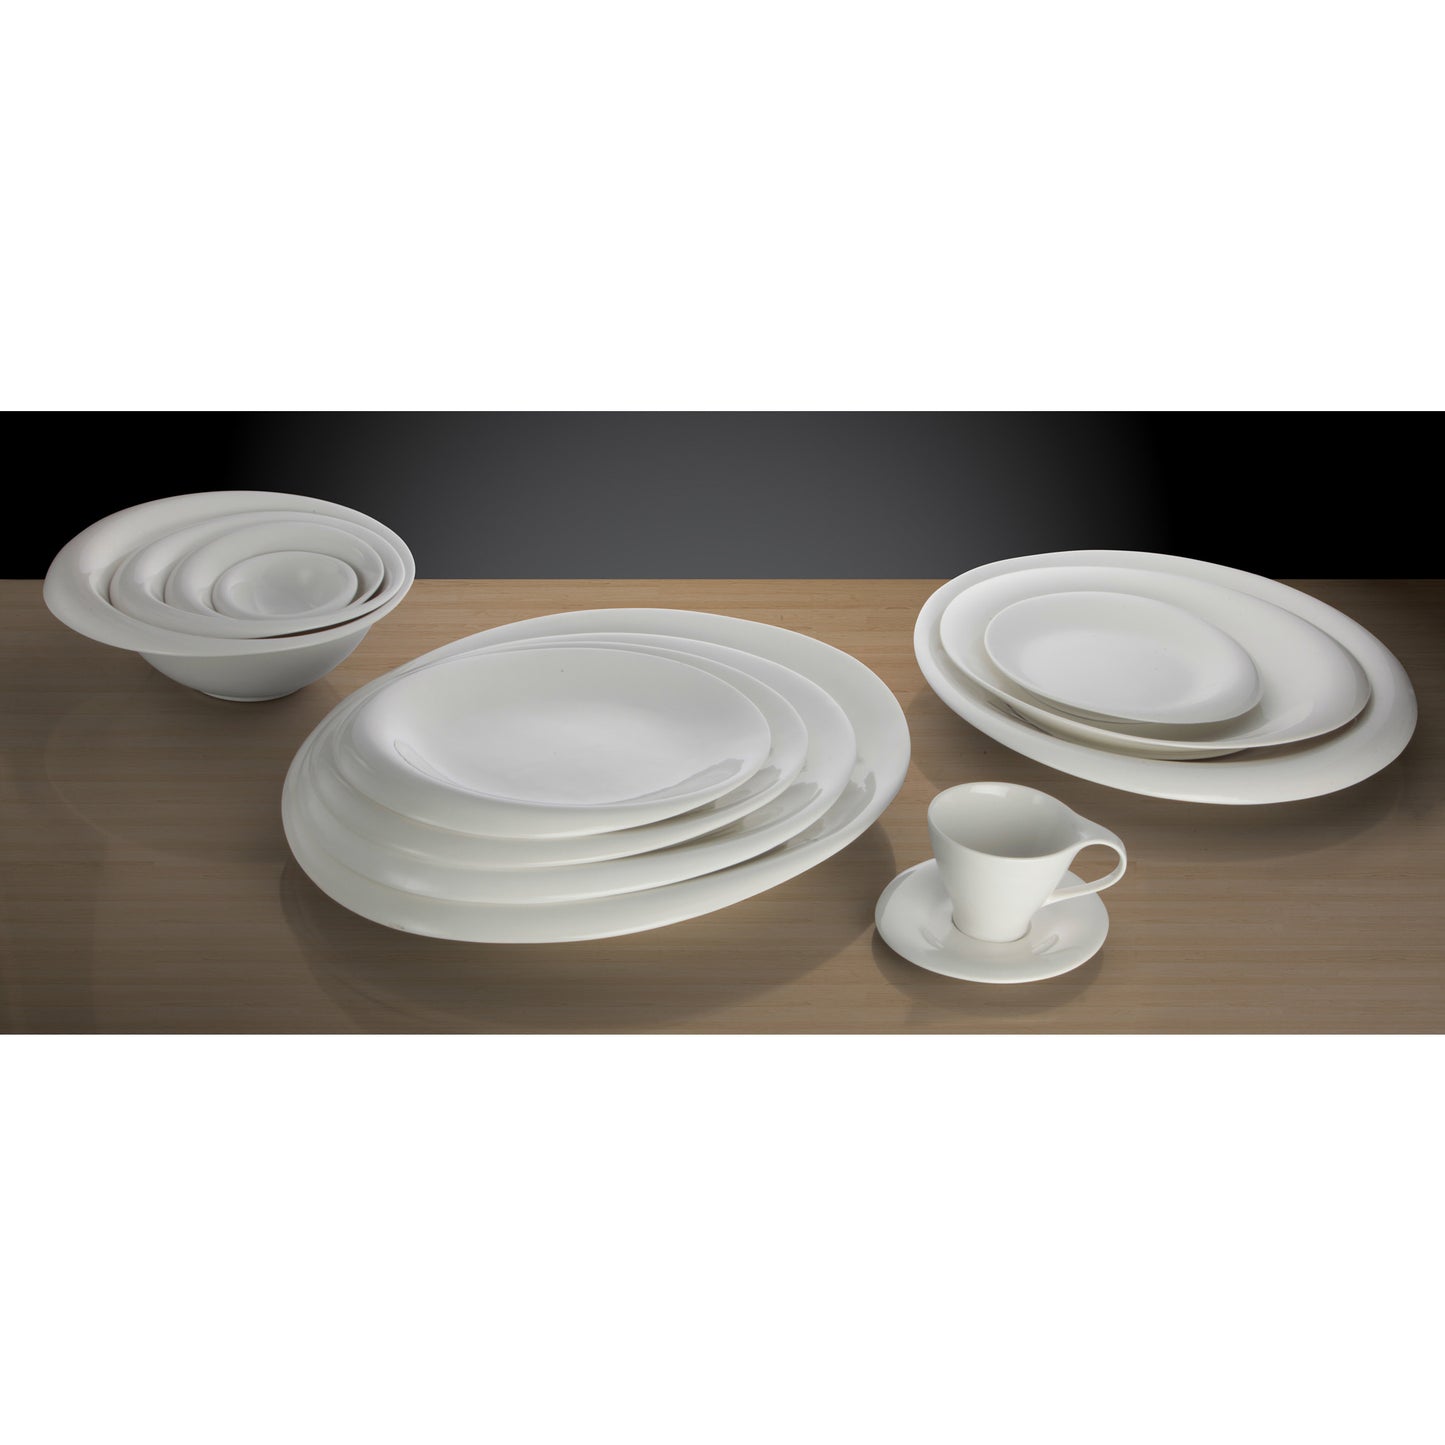 WDP004-203 - 12"Dia. Porcelain Round Plate, Creamy White, 12 pcs/case